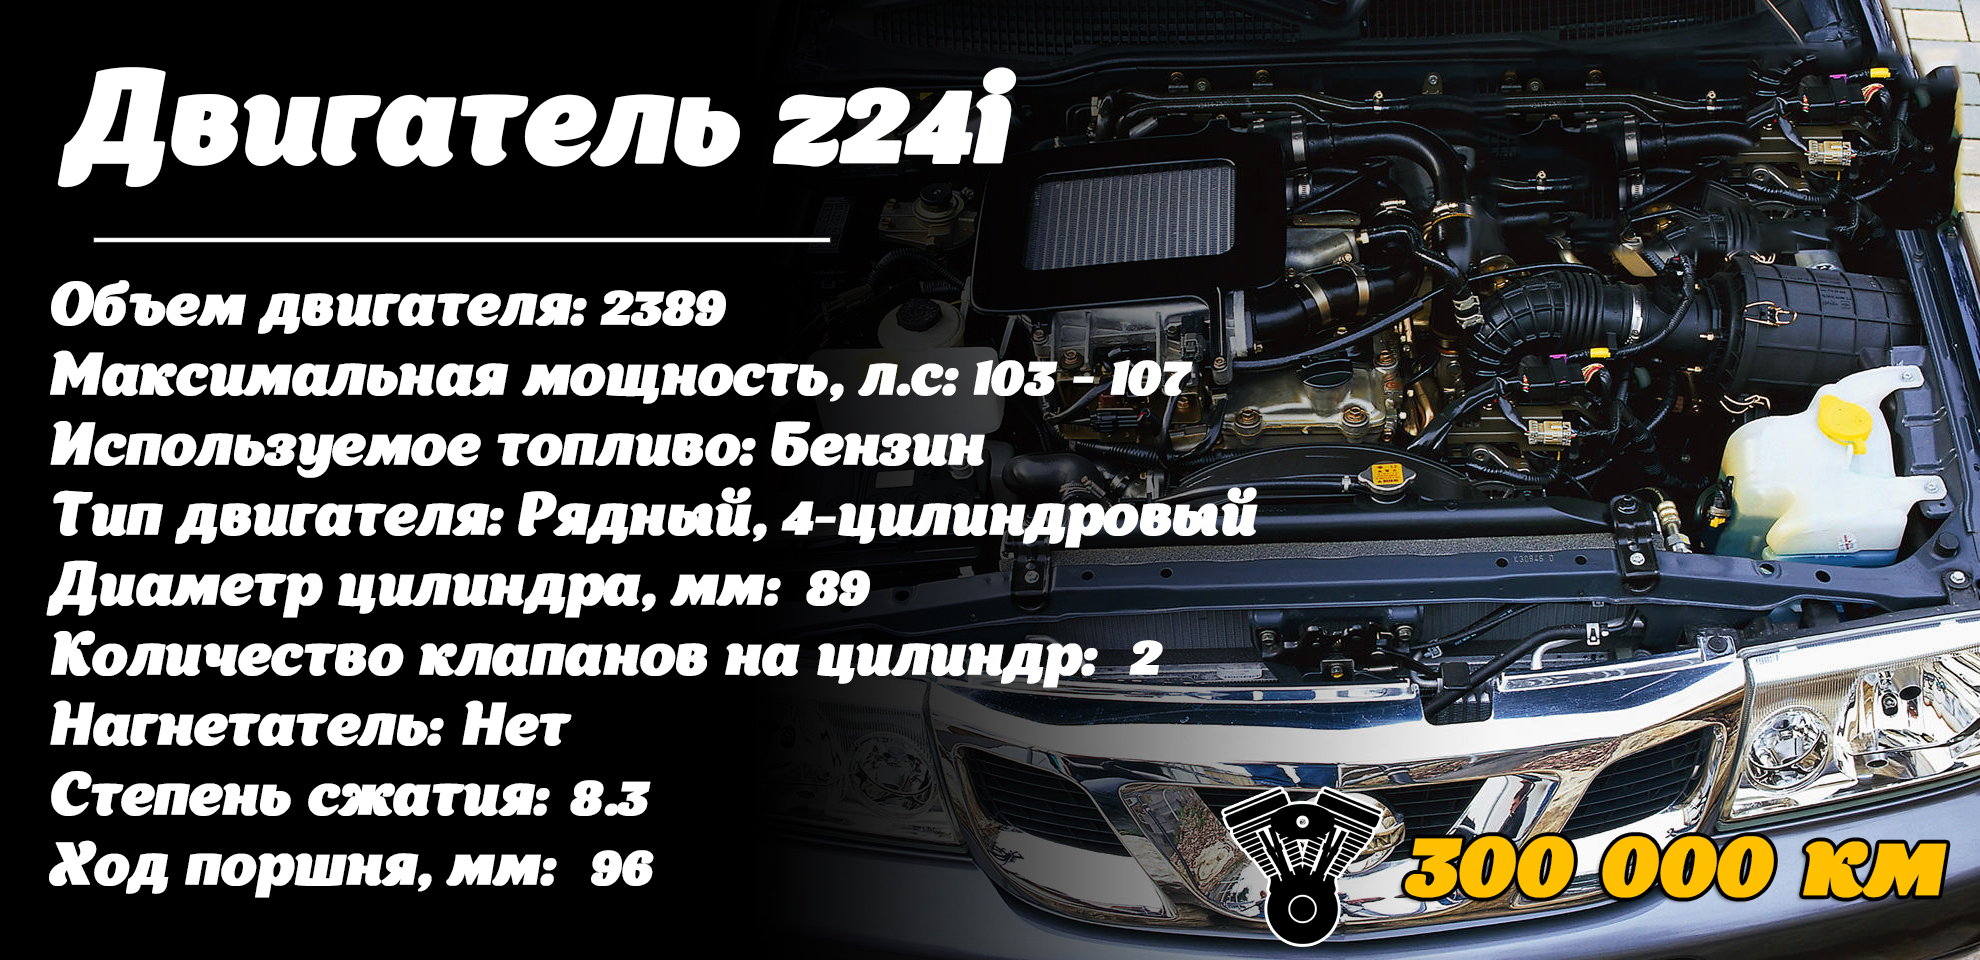 двигатель Z24i